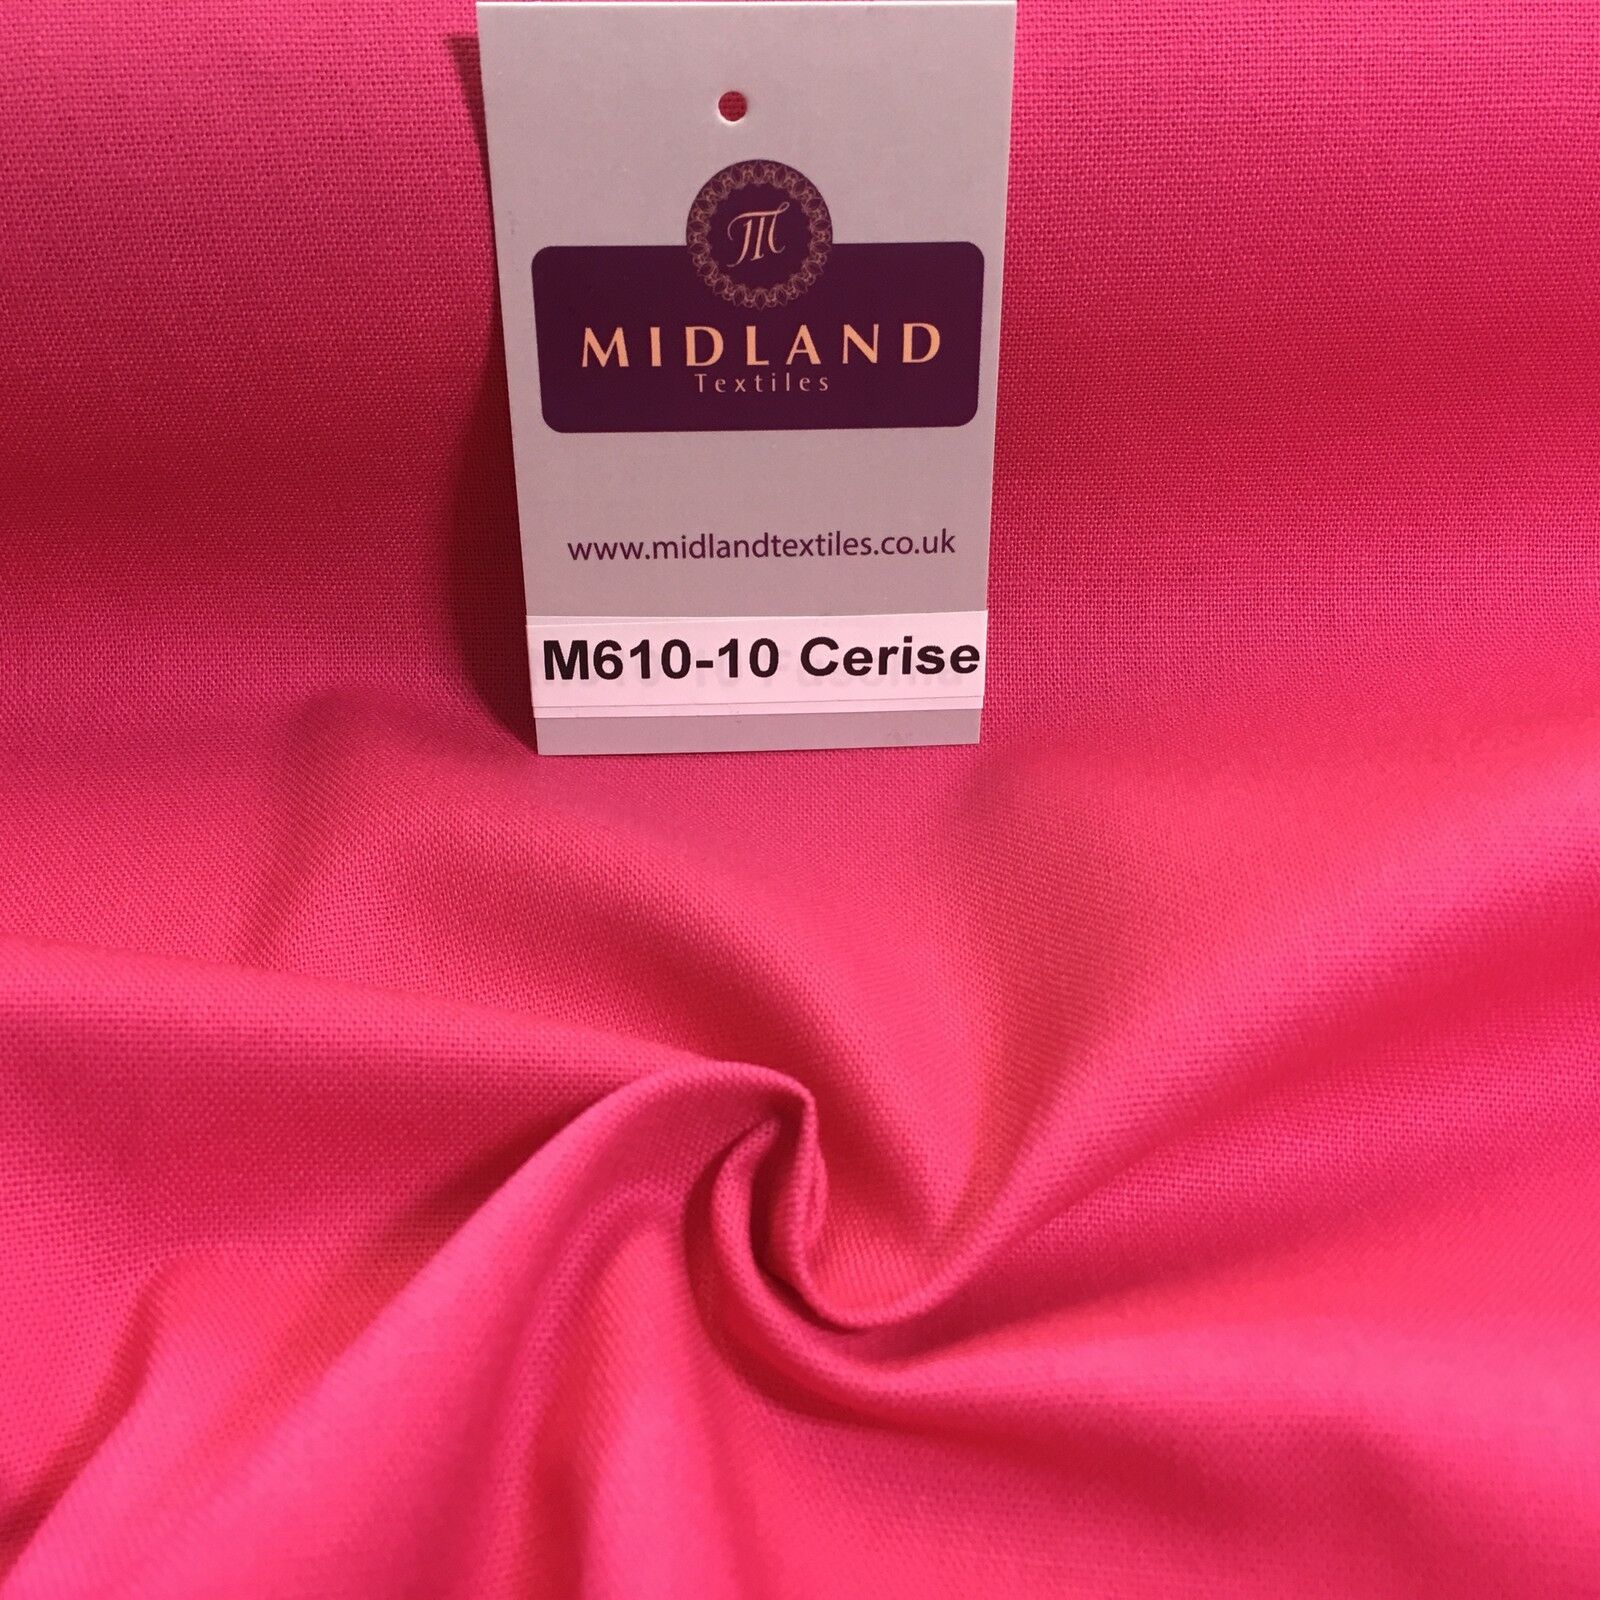 100% Cotton Plain Canvas Crafting Medium Weight Fabric 44" Wide M610 Mtex